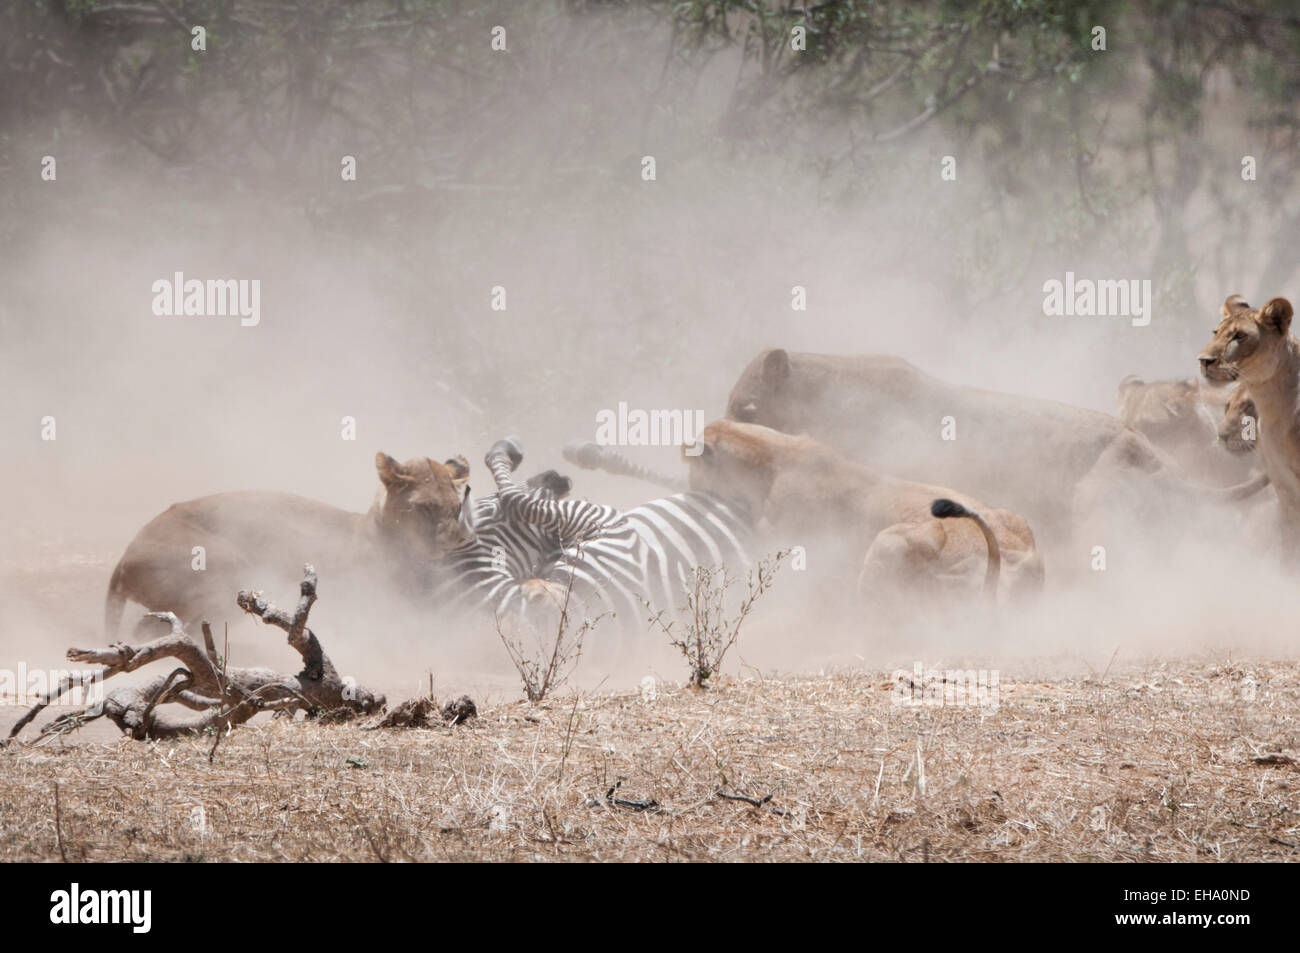 Lions attacking zebra Stock Photo